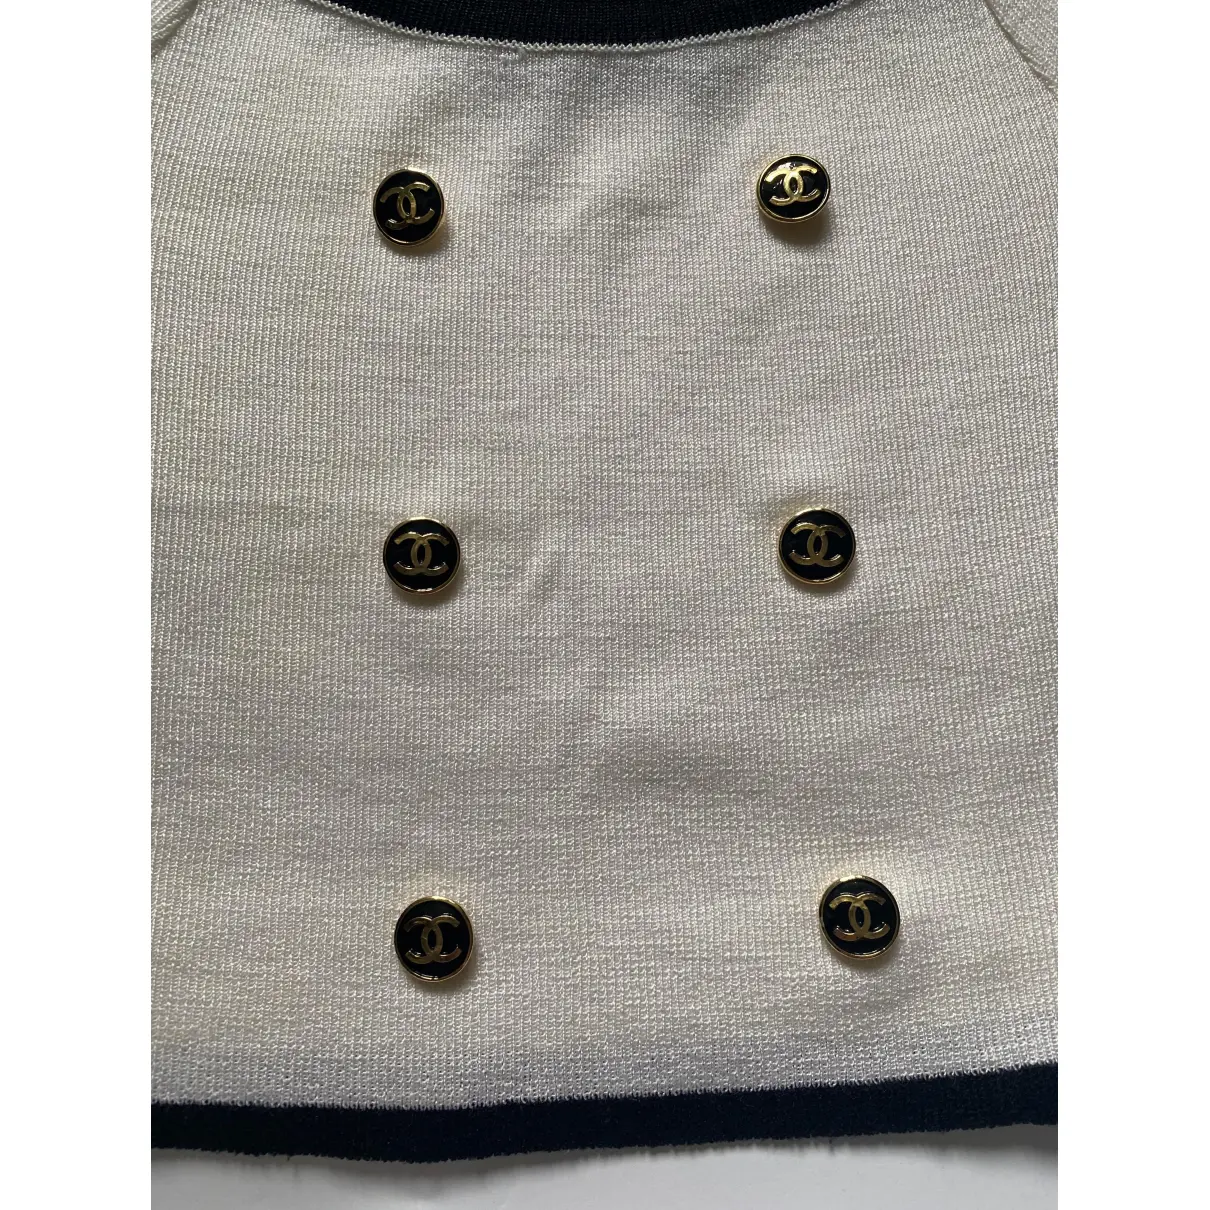 Buy Chanel Silk jersey top online - Vintage